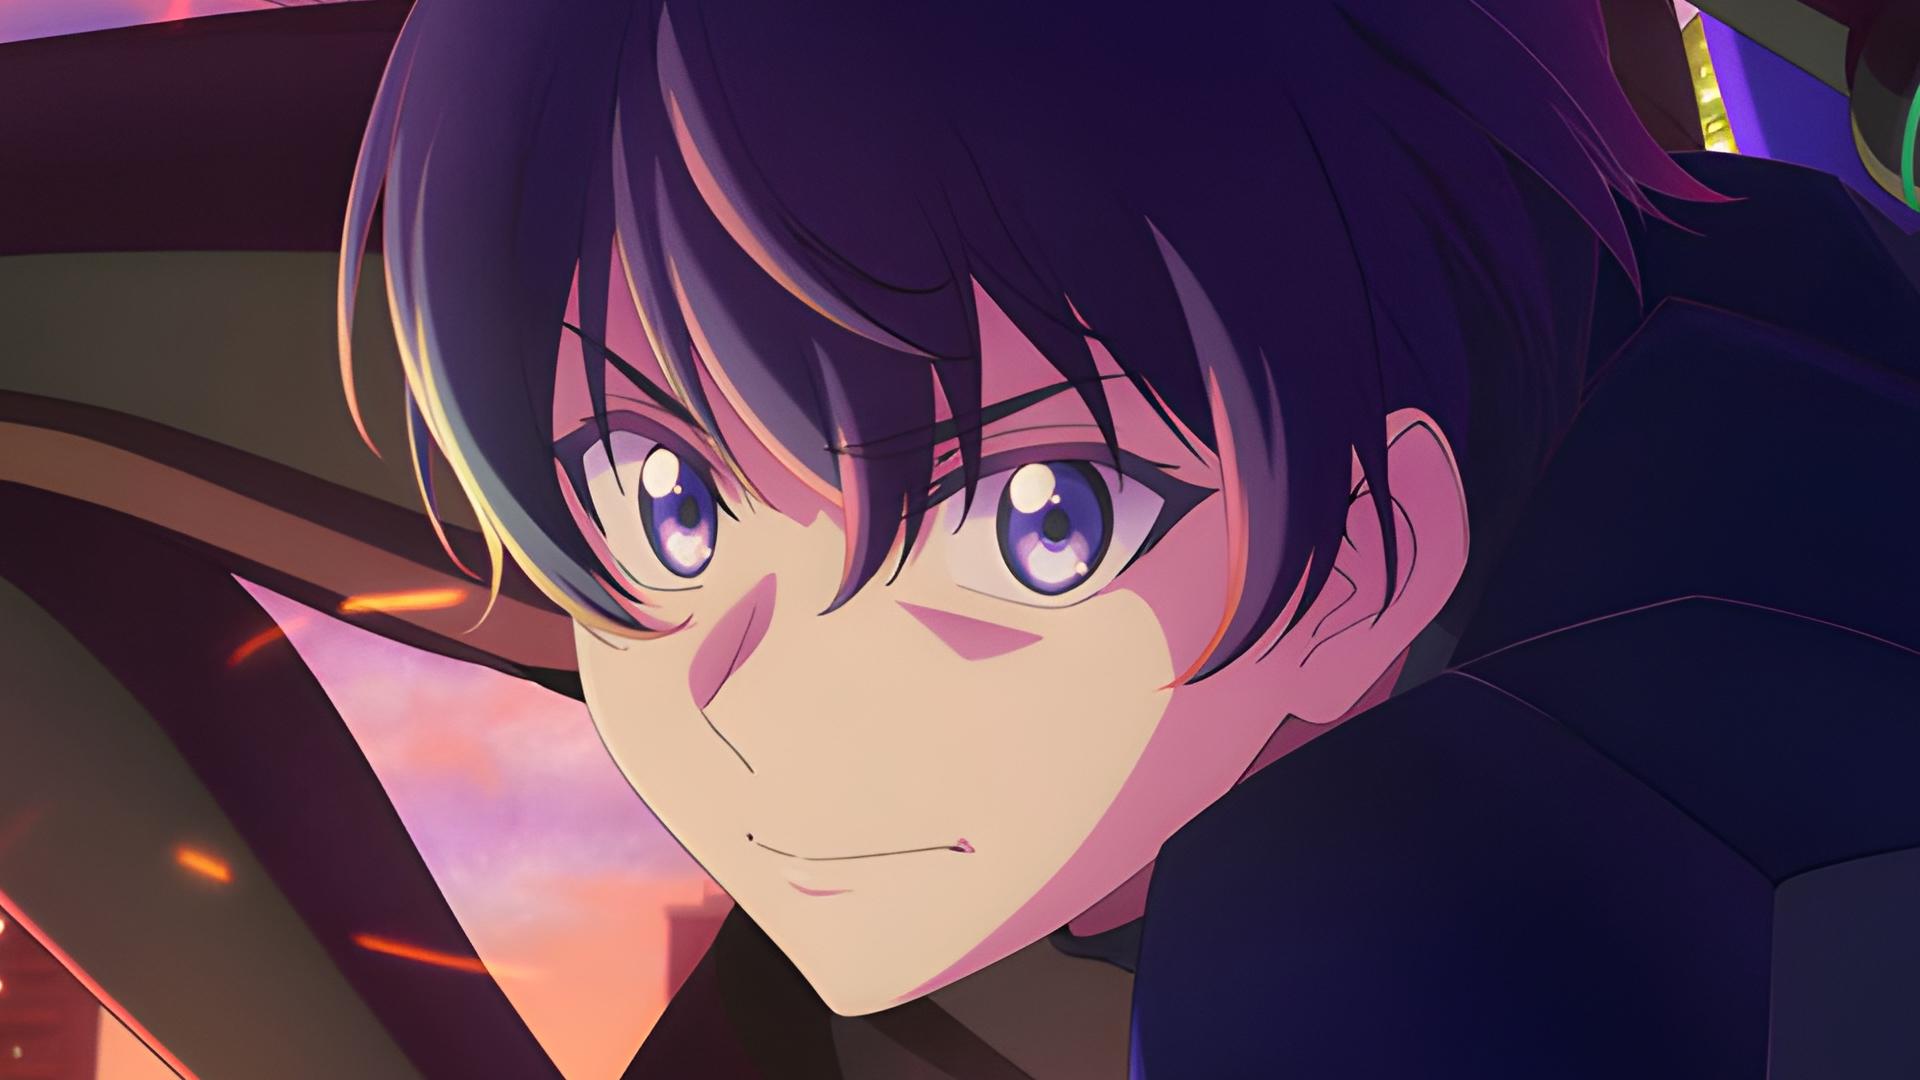 Yagate Kimi ni Naru tem nova imagem do anime revelada - Anime United